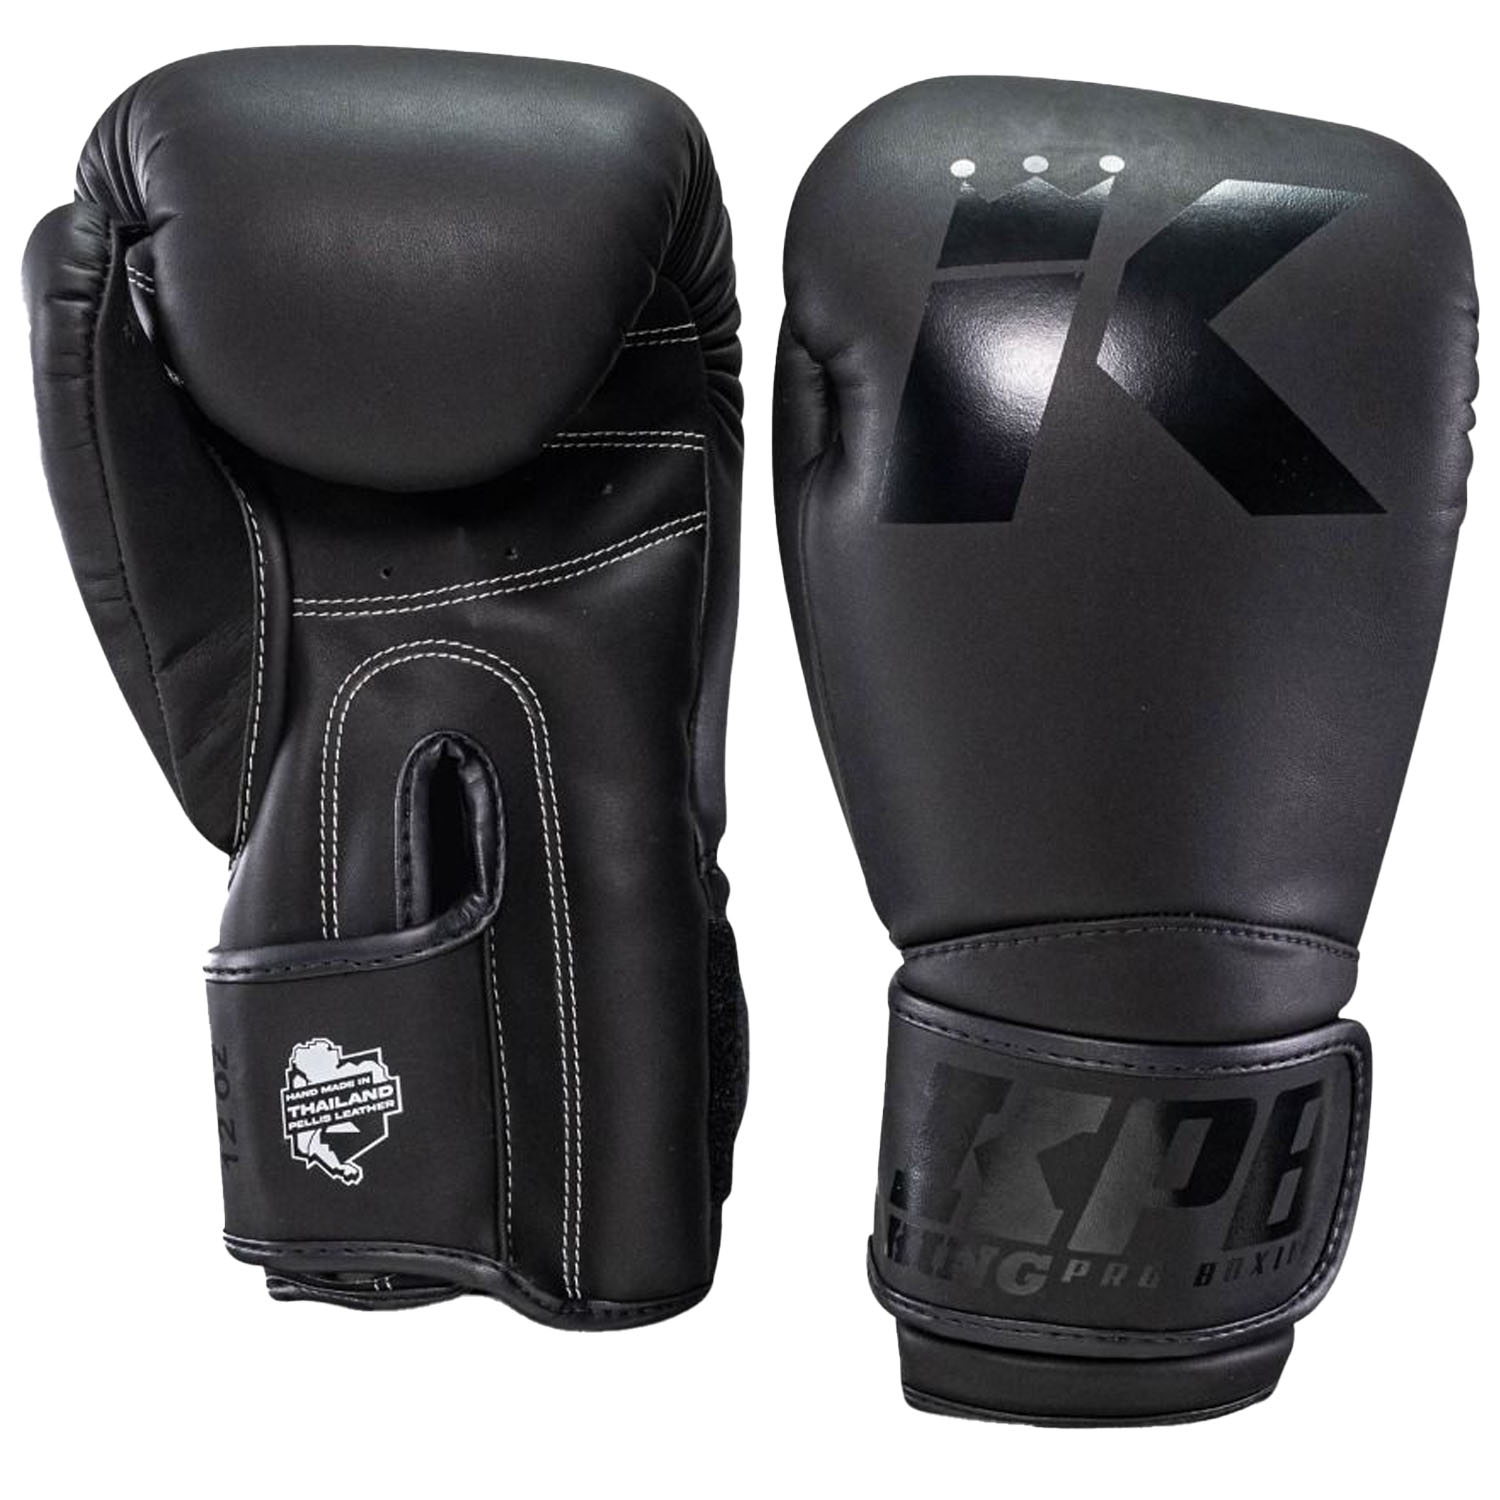 KING PRO BOXING Boxing Gloves, BGK 1, black